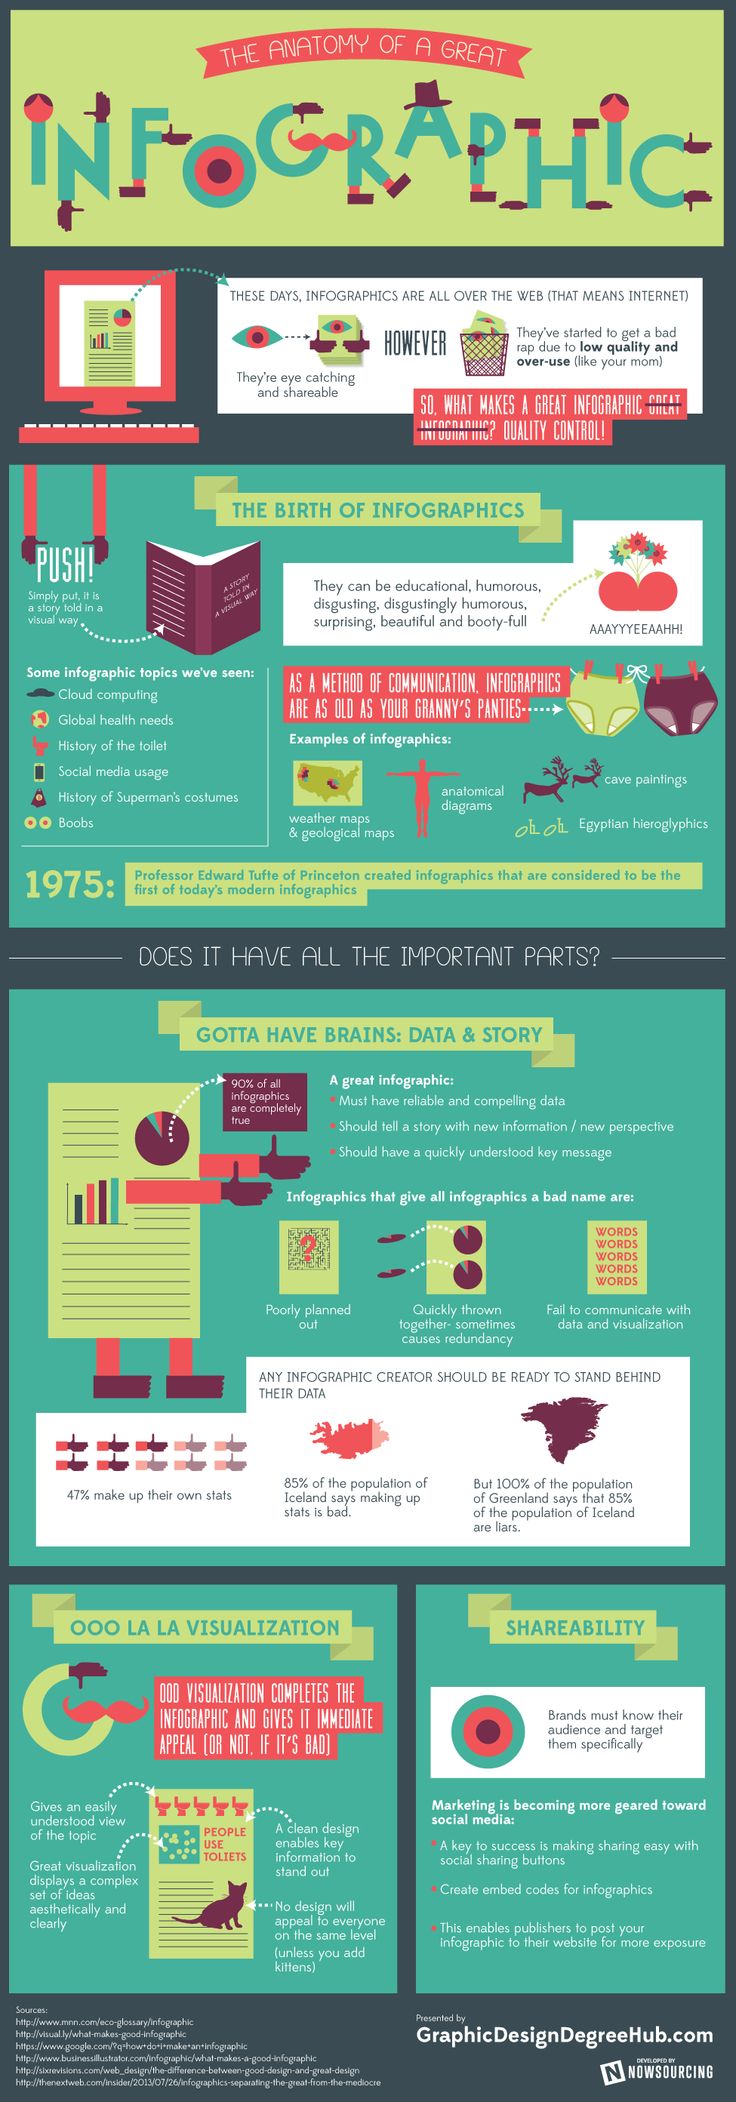 infographic on infographics